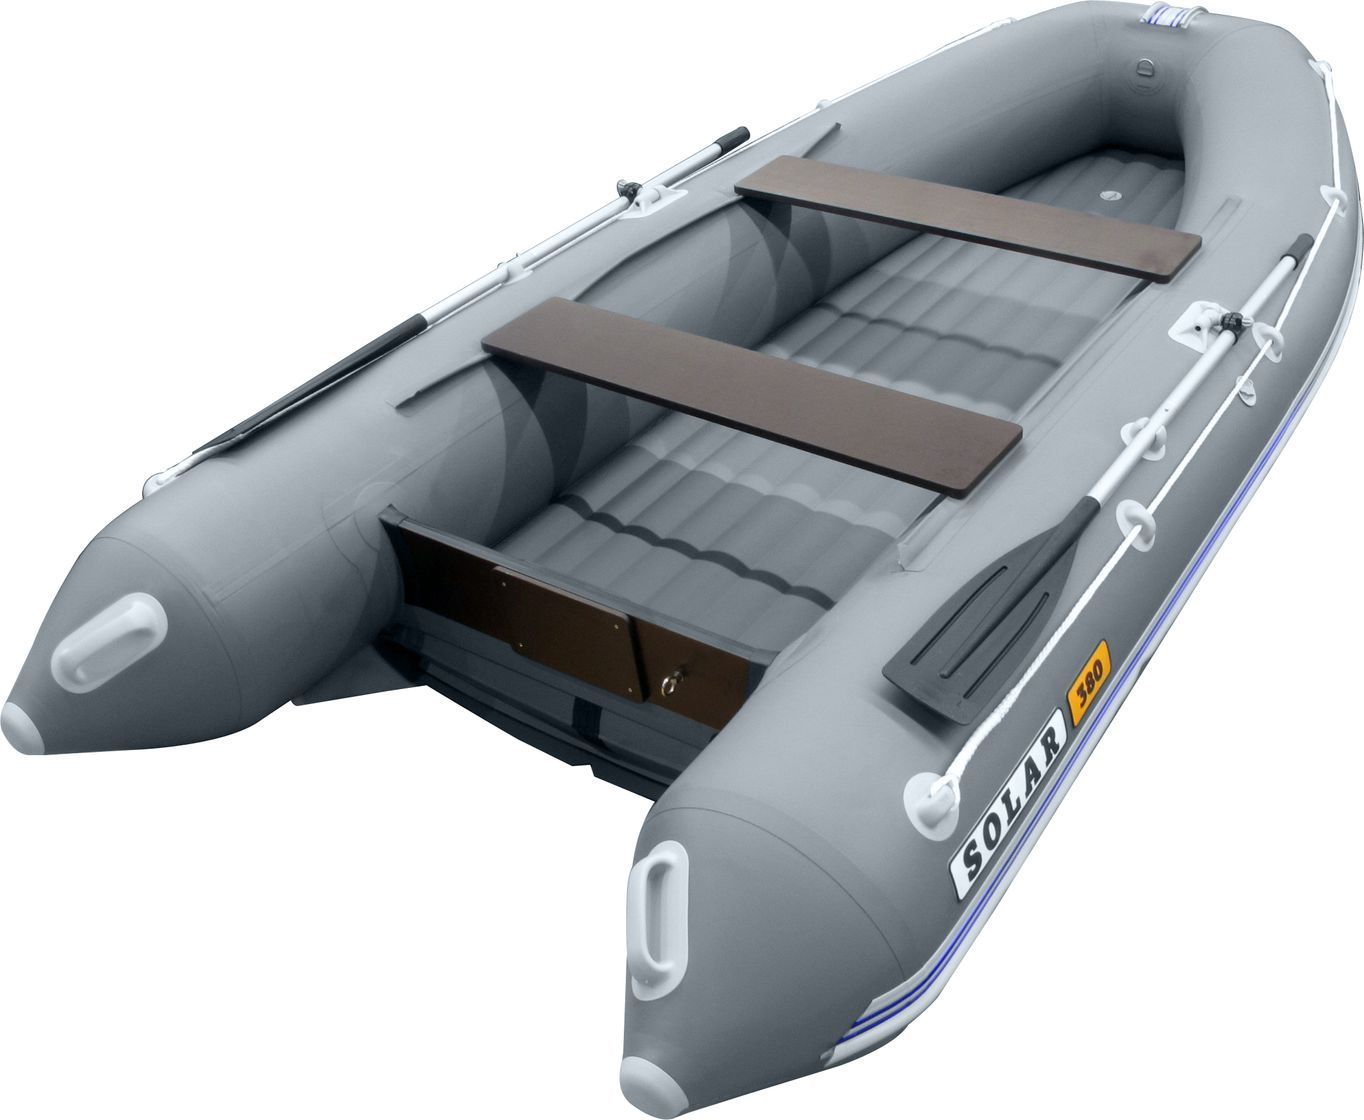 Надувная лодка ПВХ SOLAR-330 К (Оптима), серый SLR330k_opt_grey надувная лодка пвх solar 330 к оптима серый slr330k opt grey